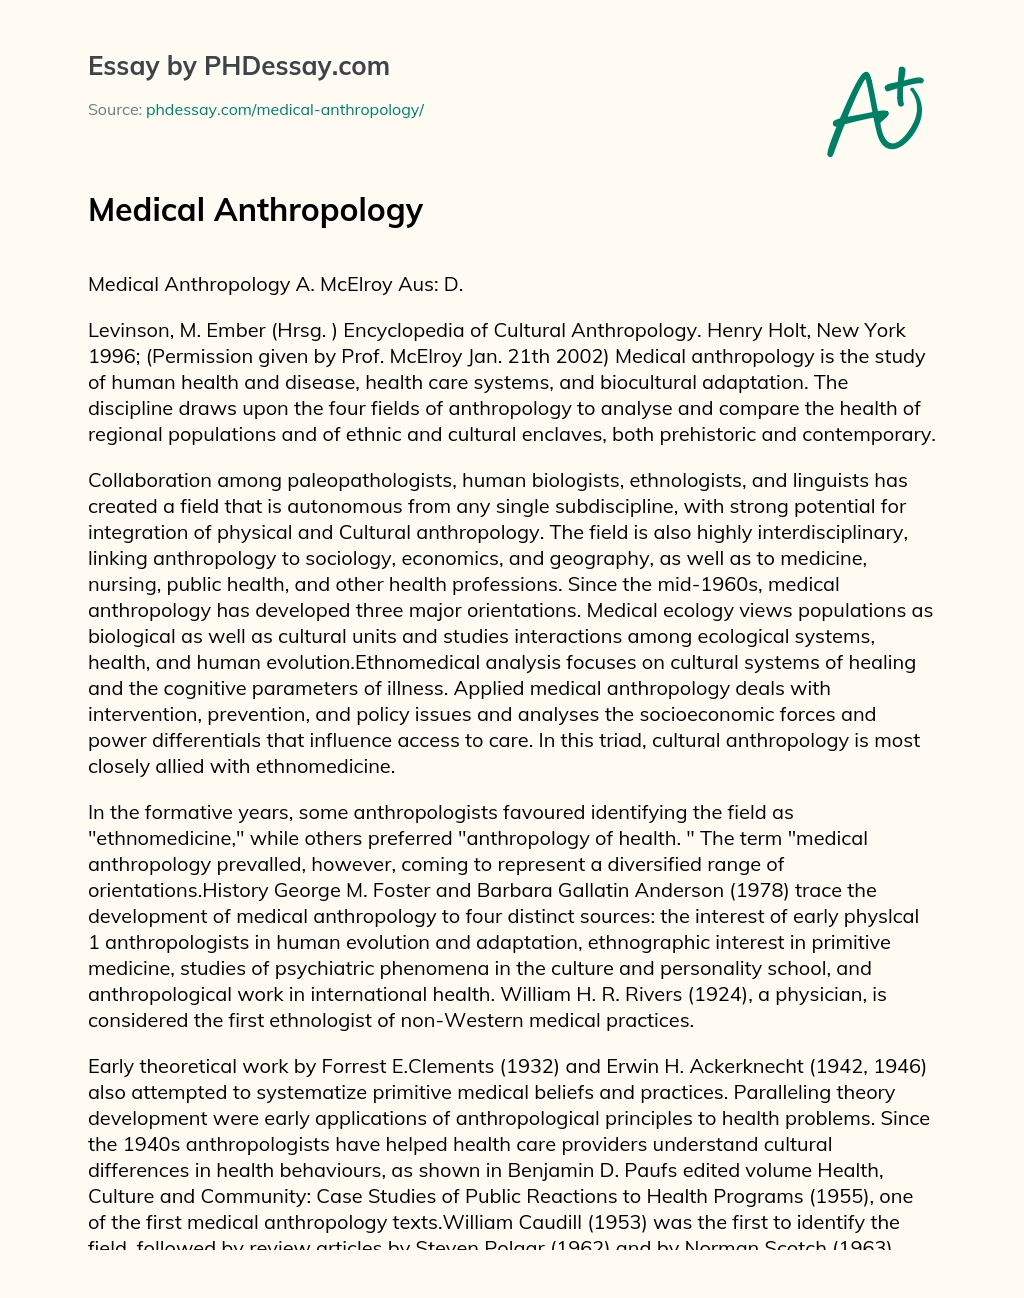 Medical Anthropology essay